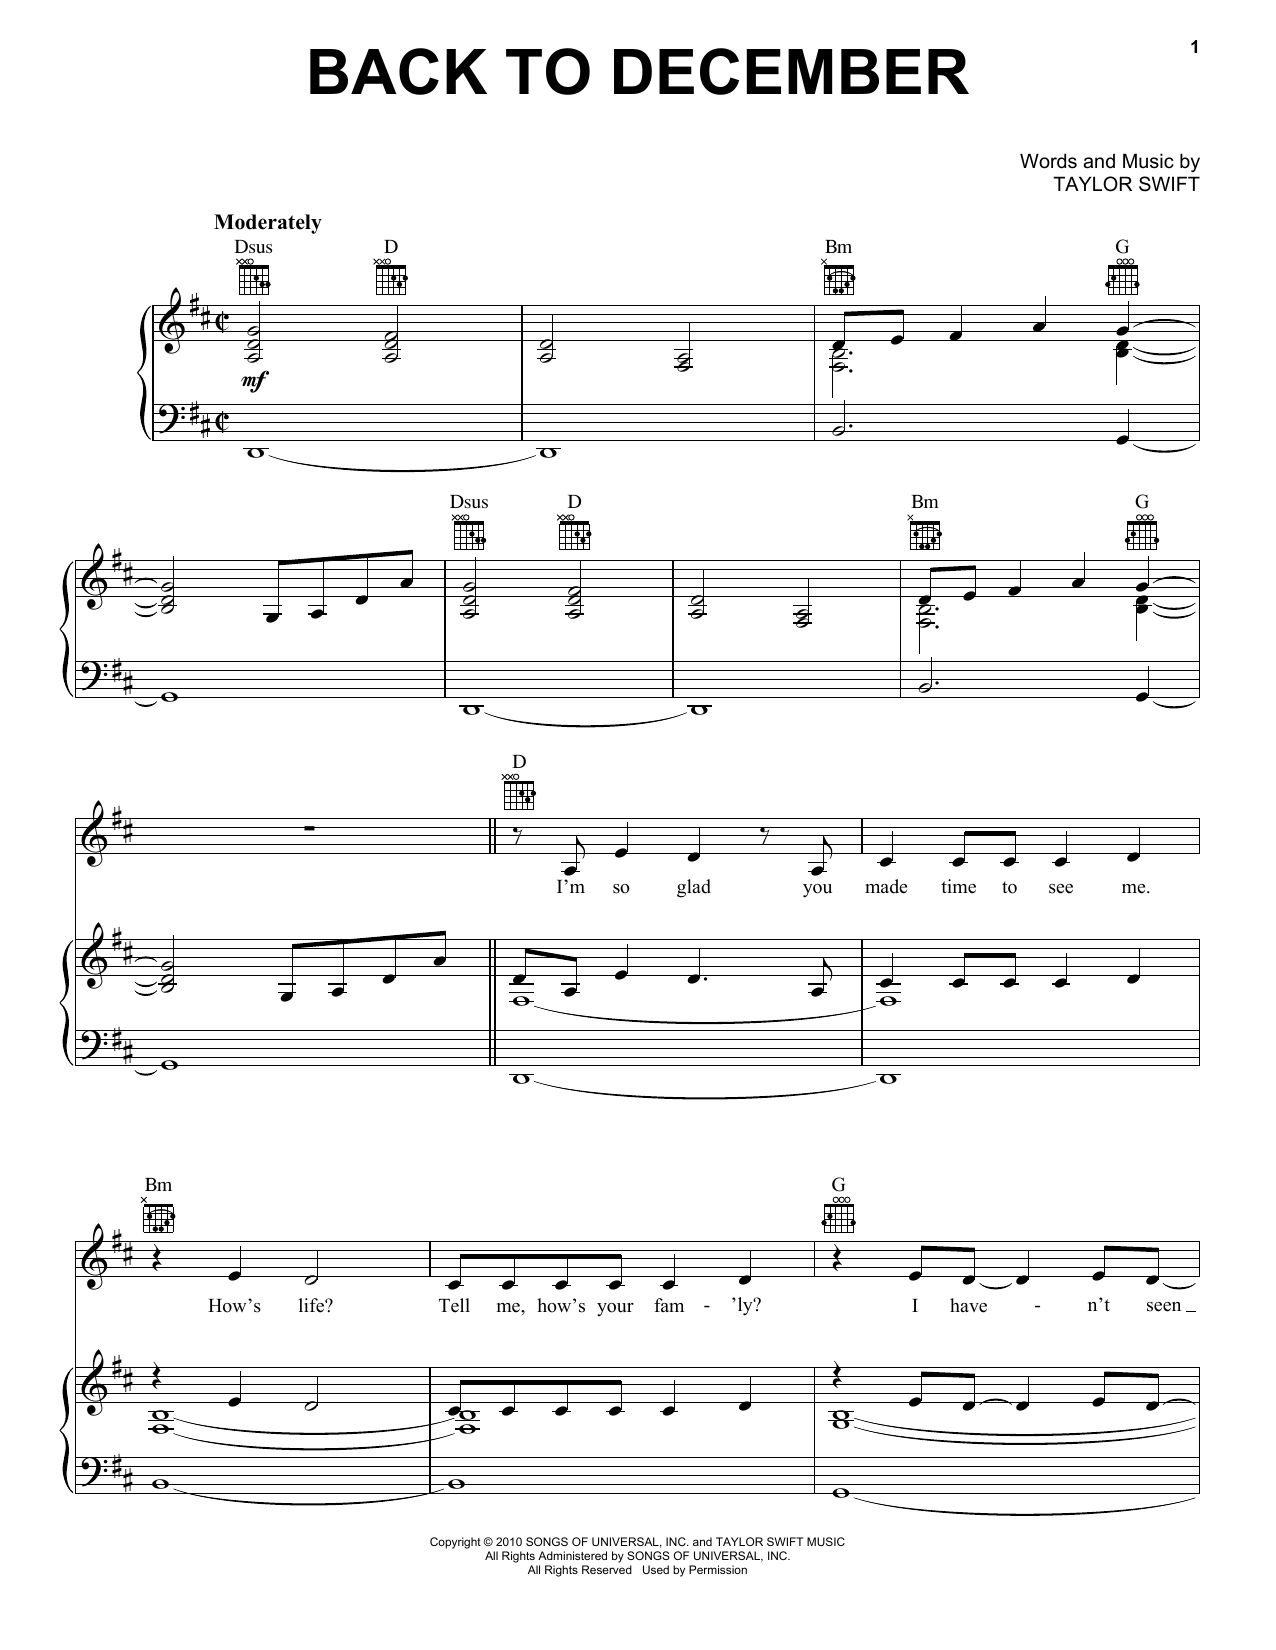 Taylor Swift Back To December Sheet Music Notes & Chords for Ukulele - Download or Print PDF